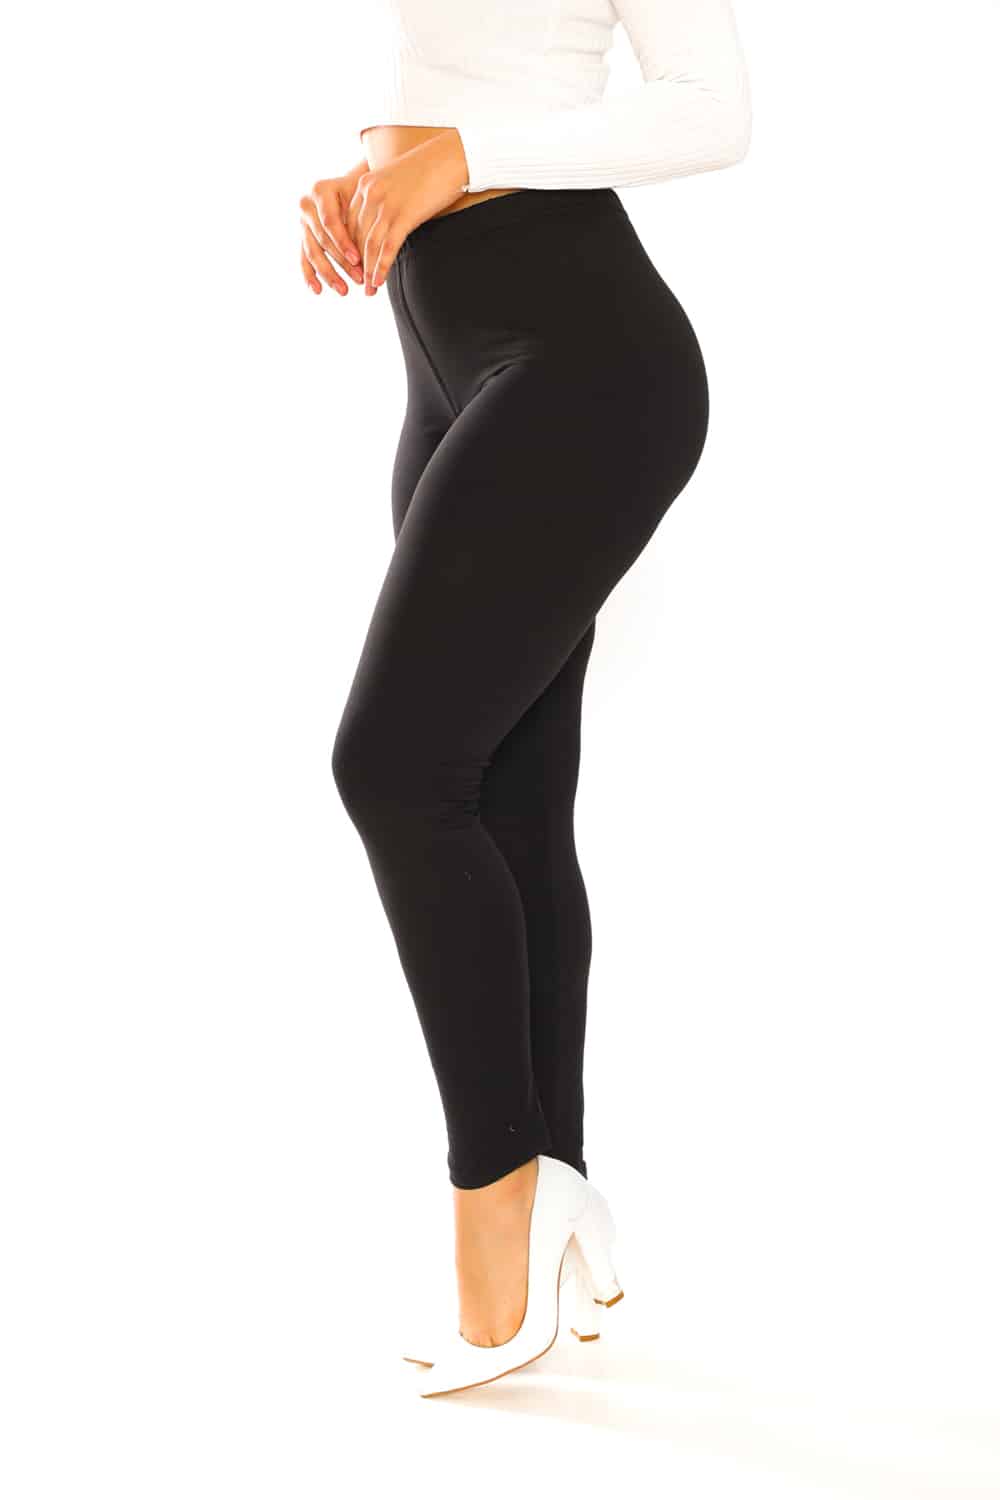 Women's solid color tight yoga pants ladies plus size elastic